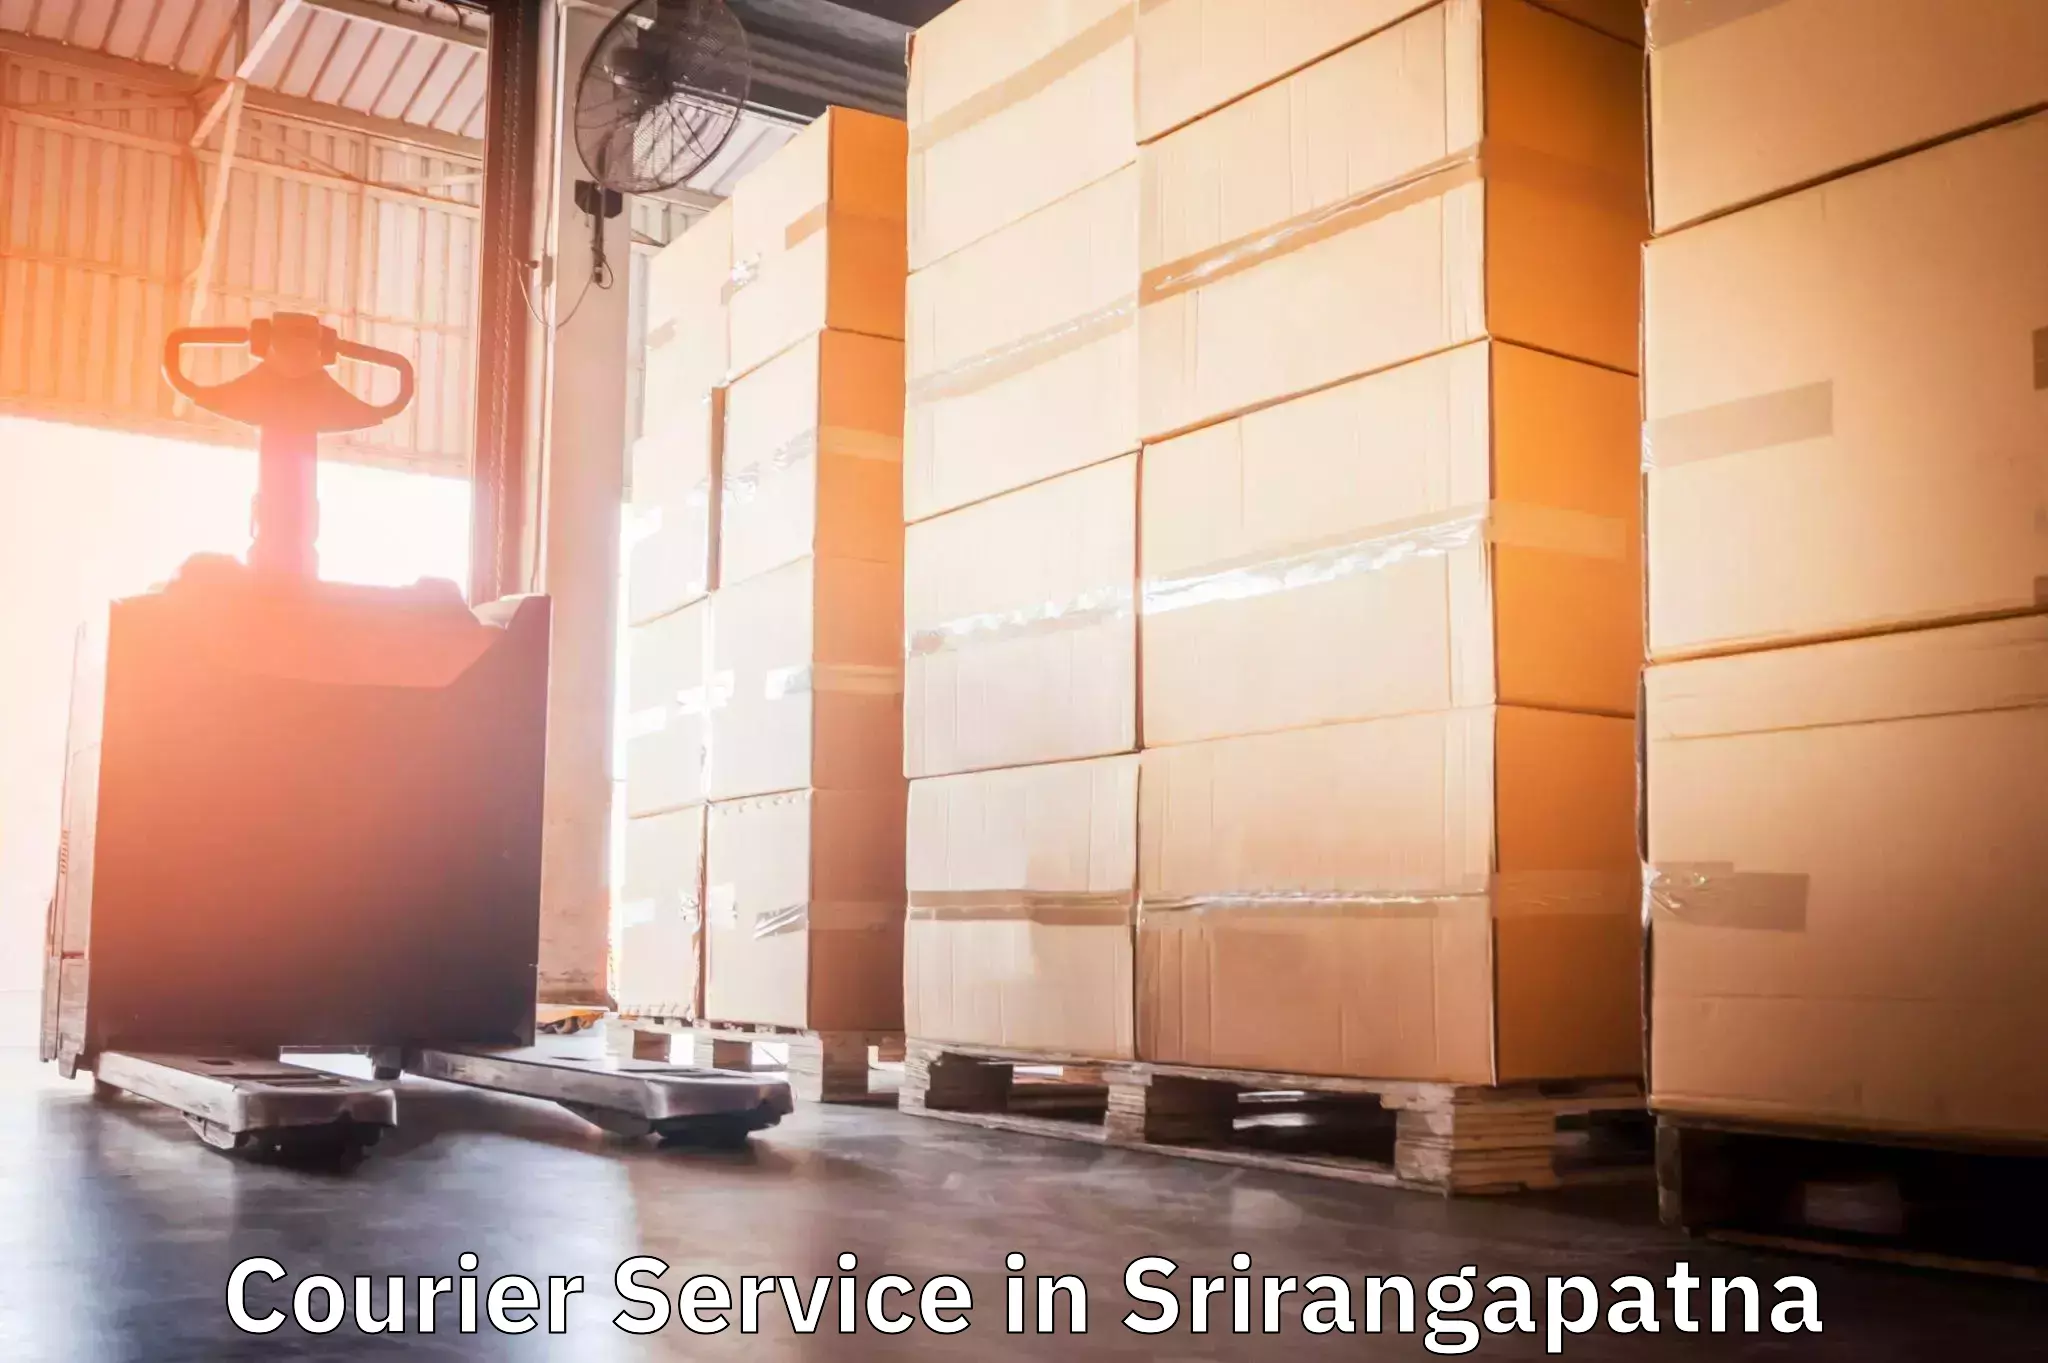 Efficient freight service in Srirangapatna